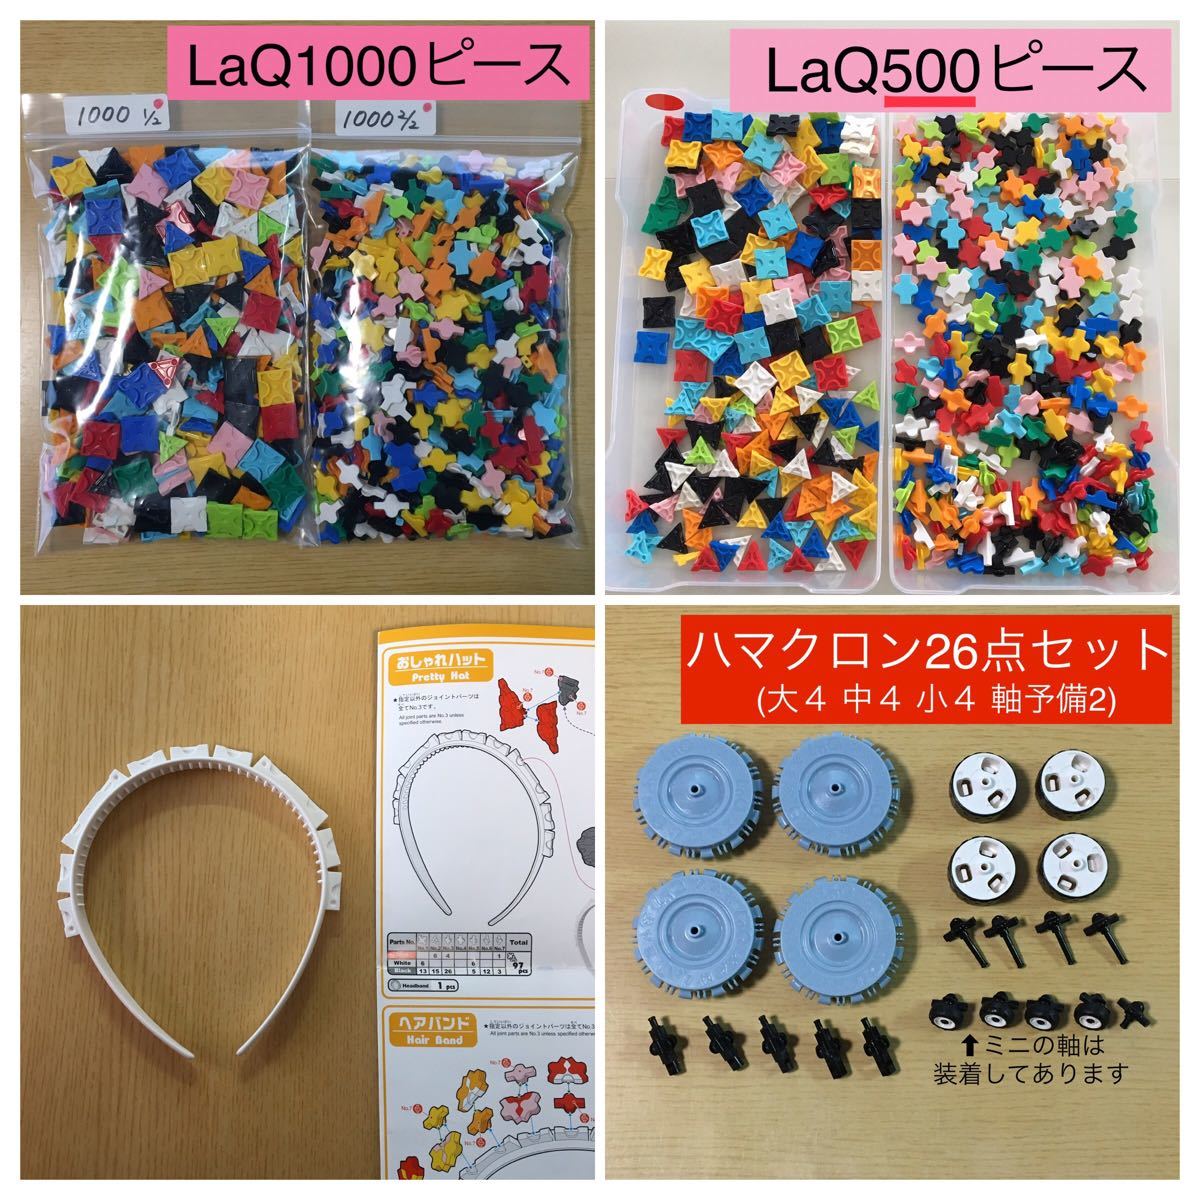 LaQ ラキュー 10000円分 - jesusyouth.co.uk